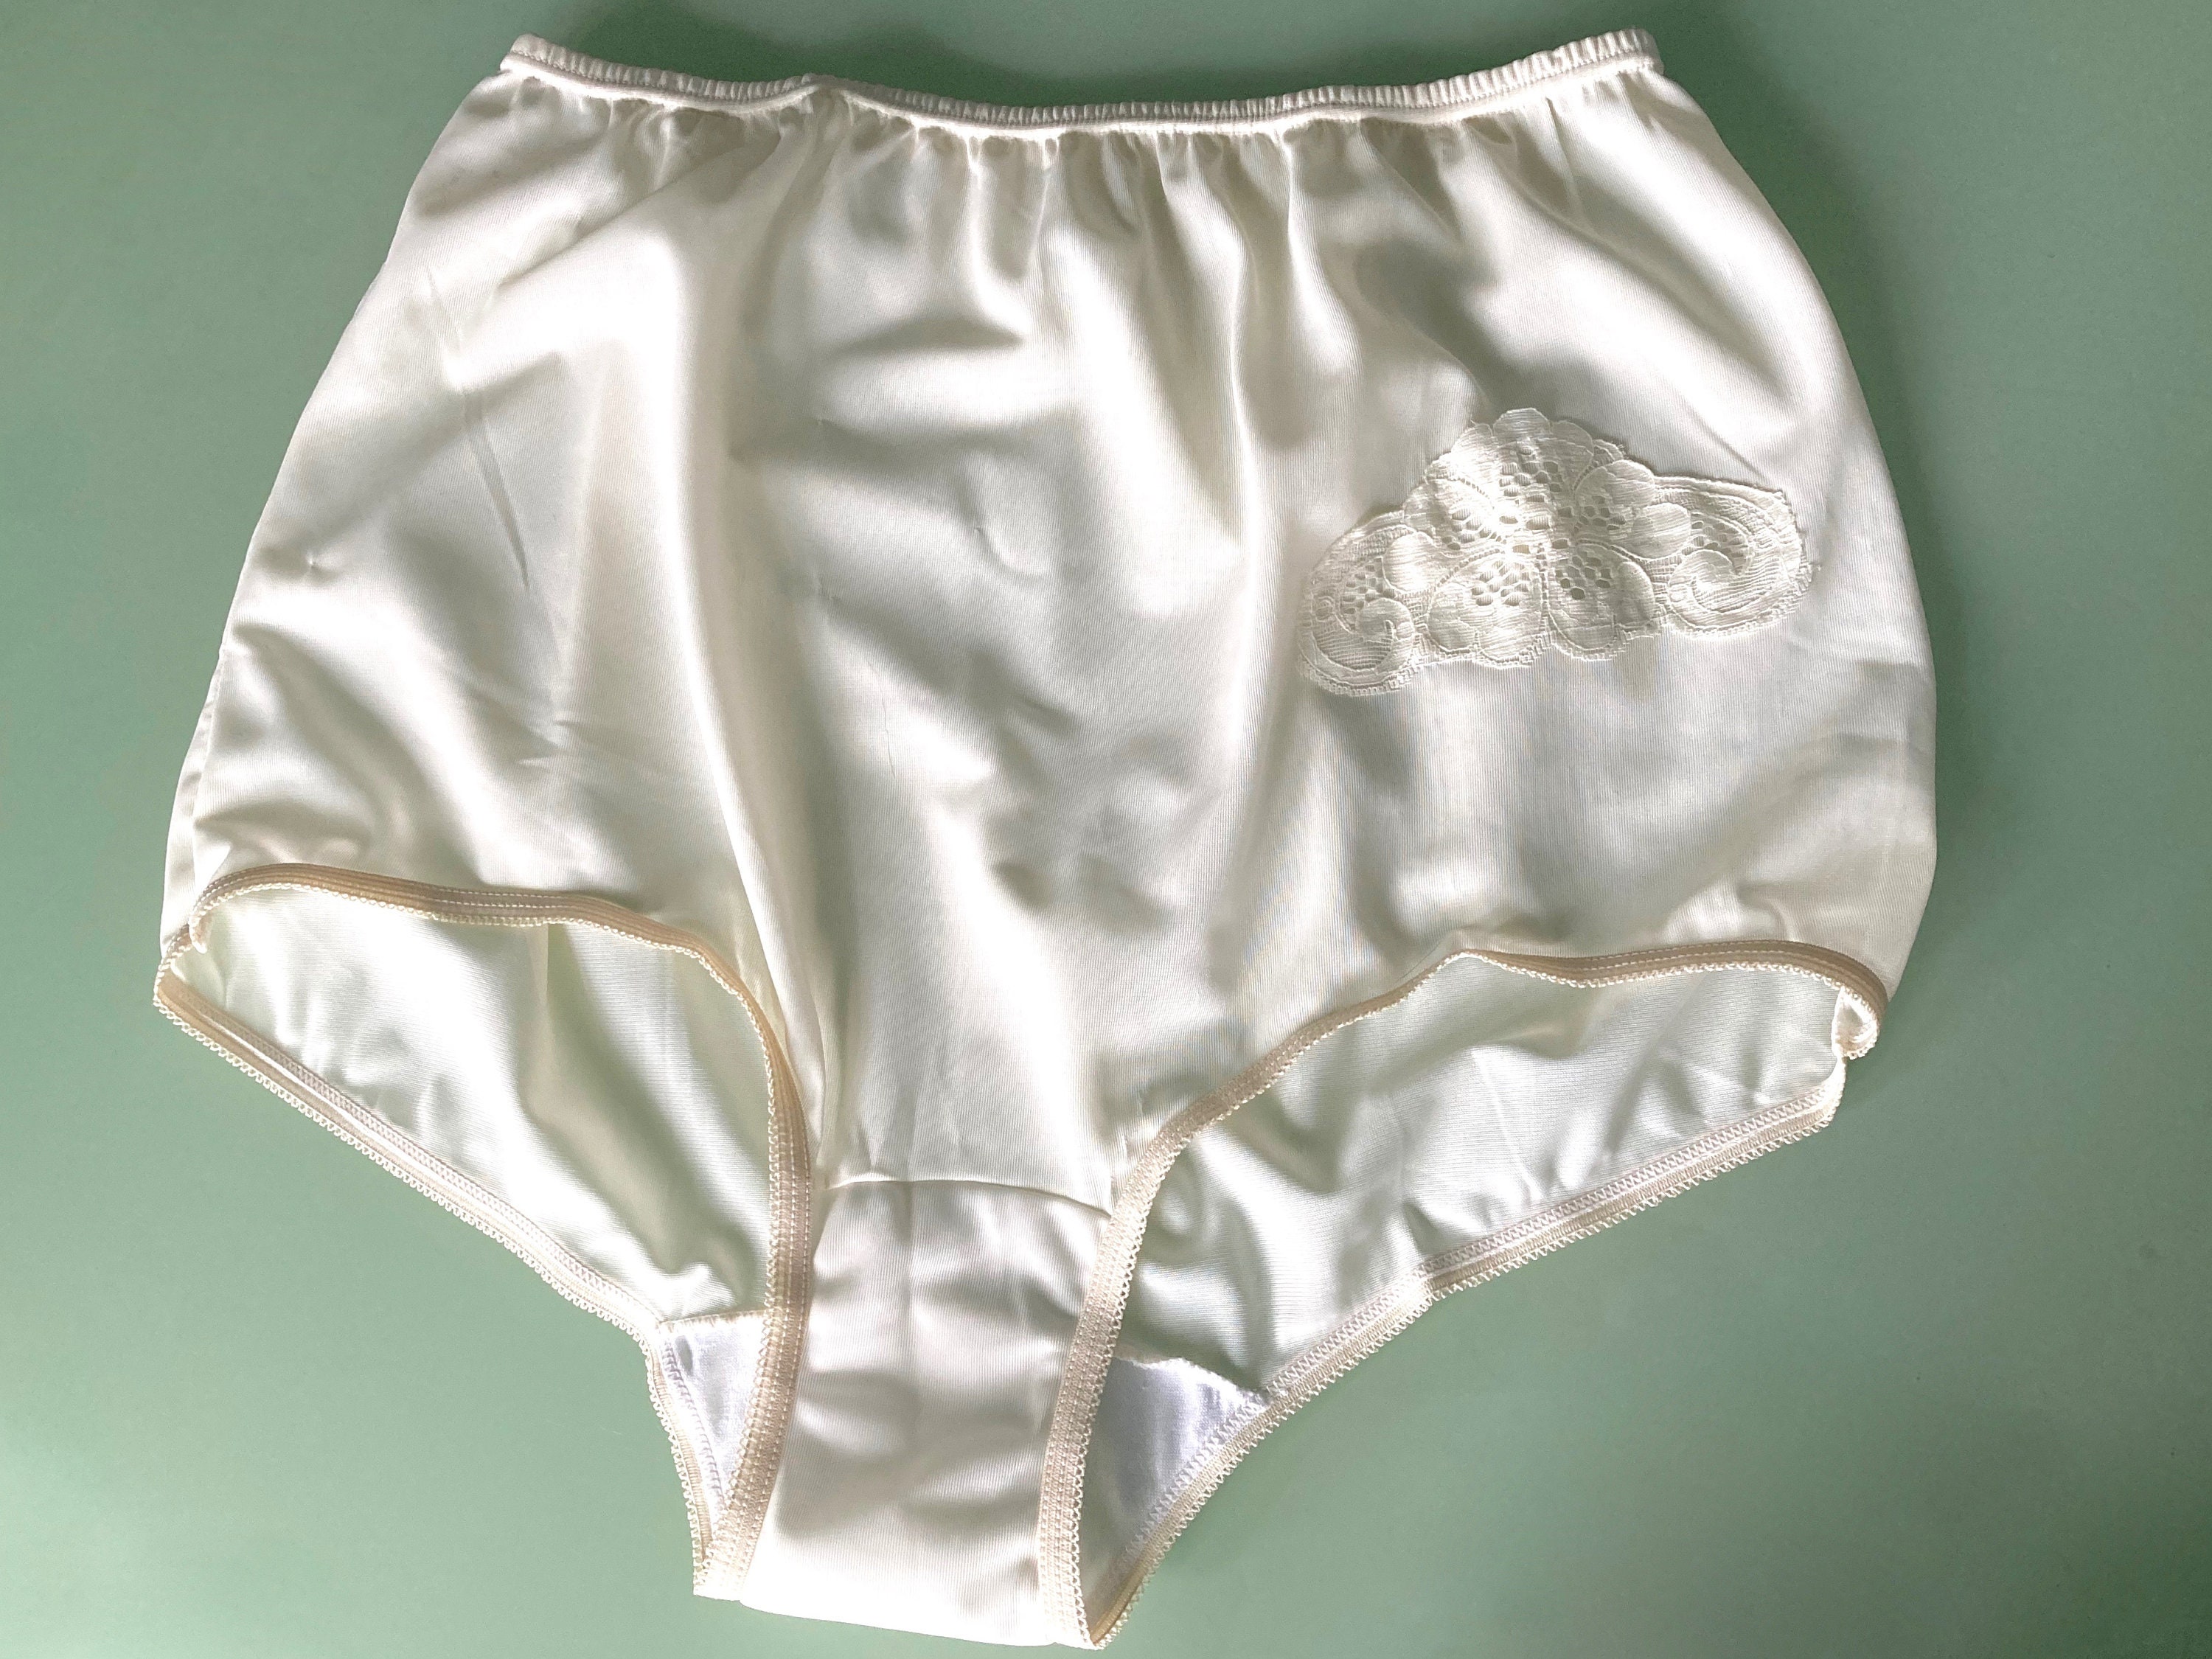 PRISTINE Vintage 1970's WHITE Nylon Panty by HANNA Size O/s 